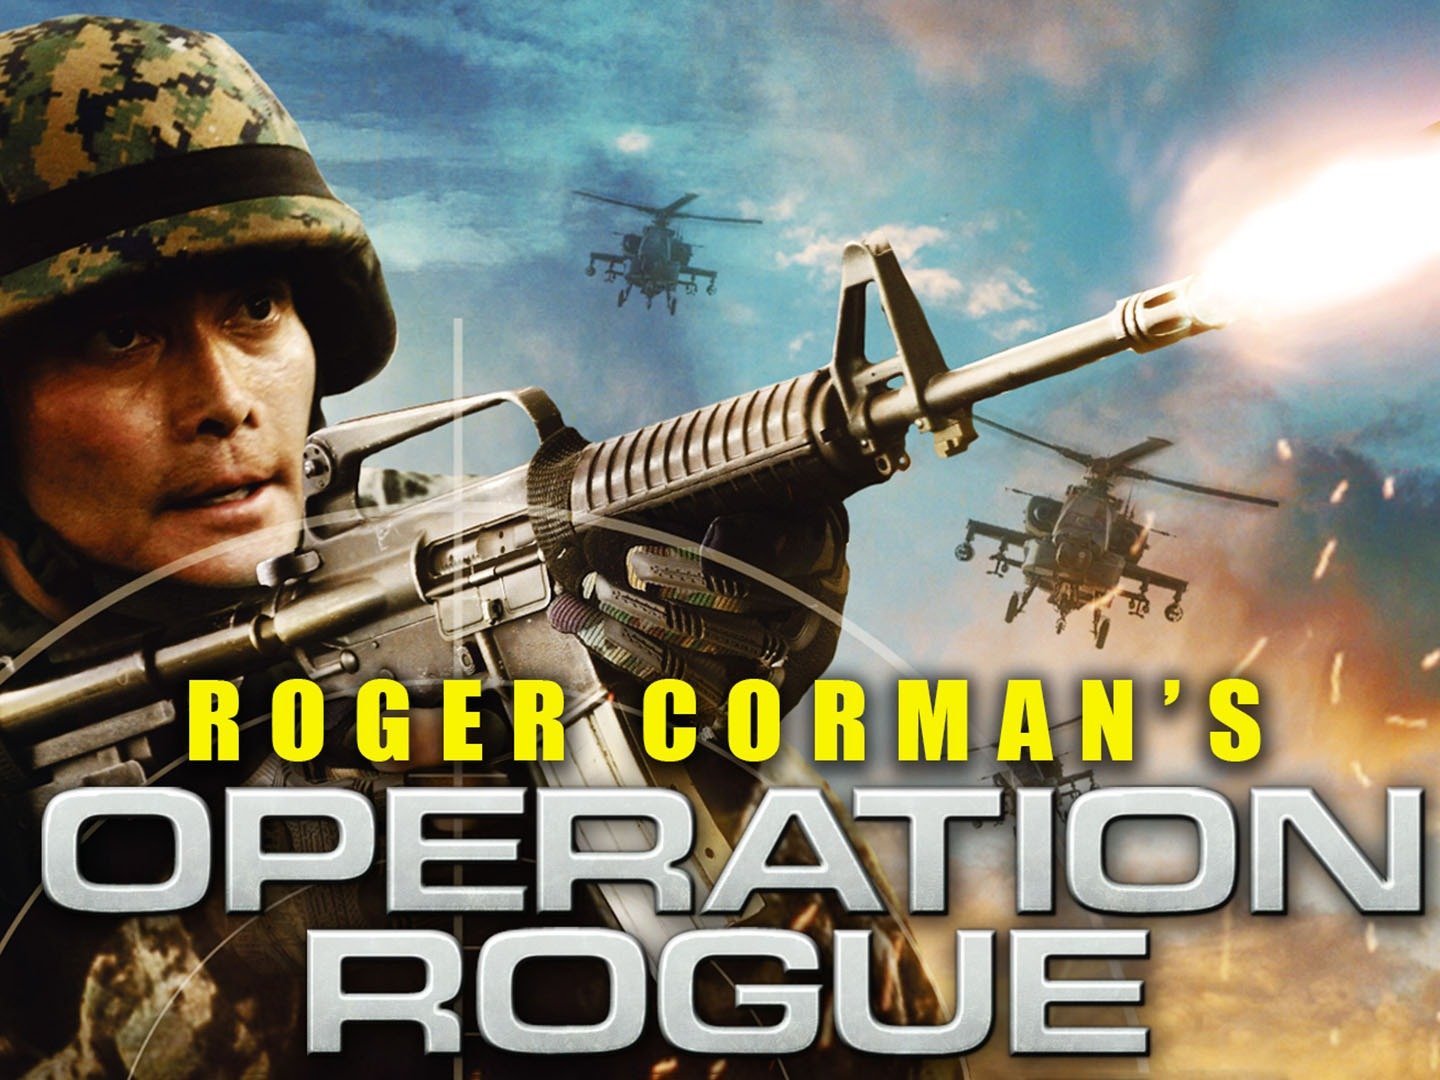 Roger corman's operation rogue cast